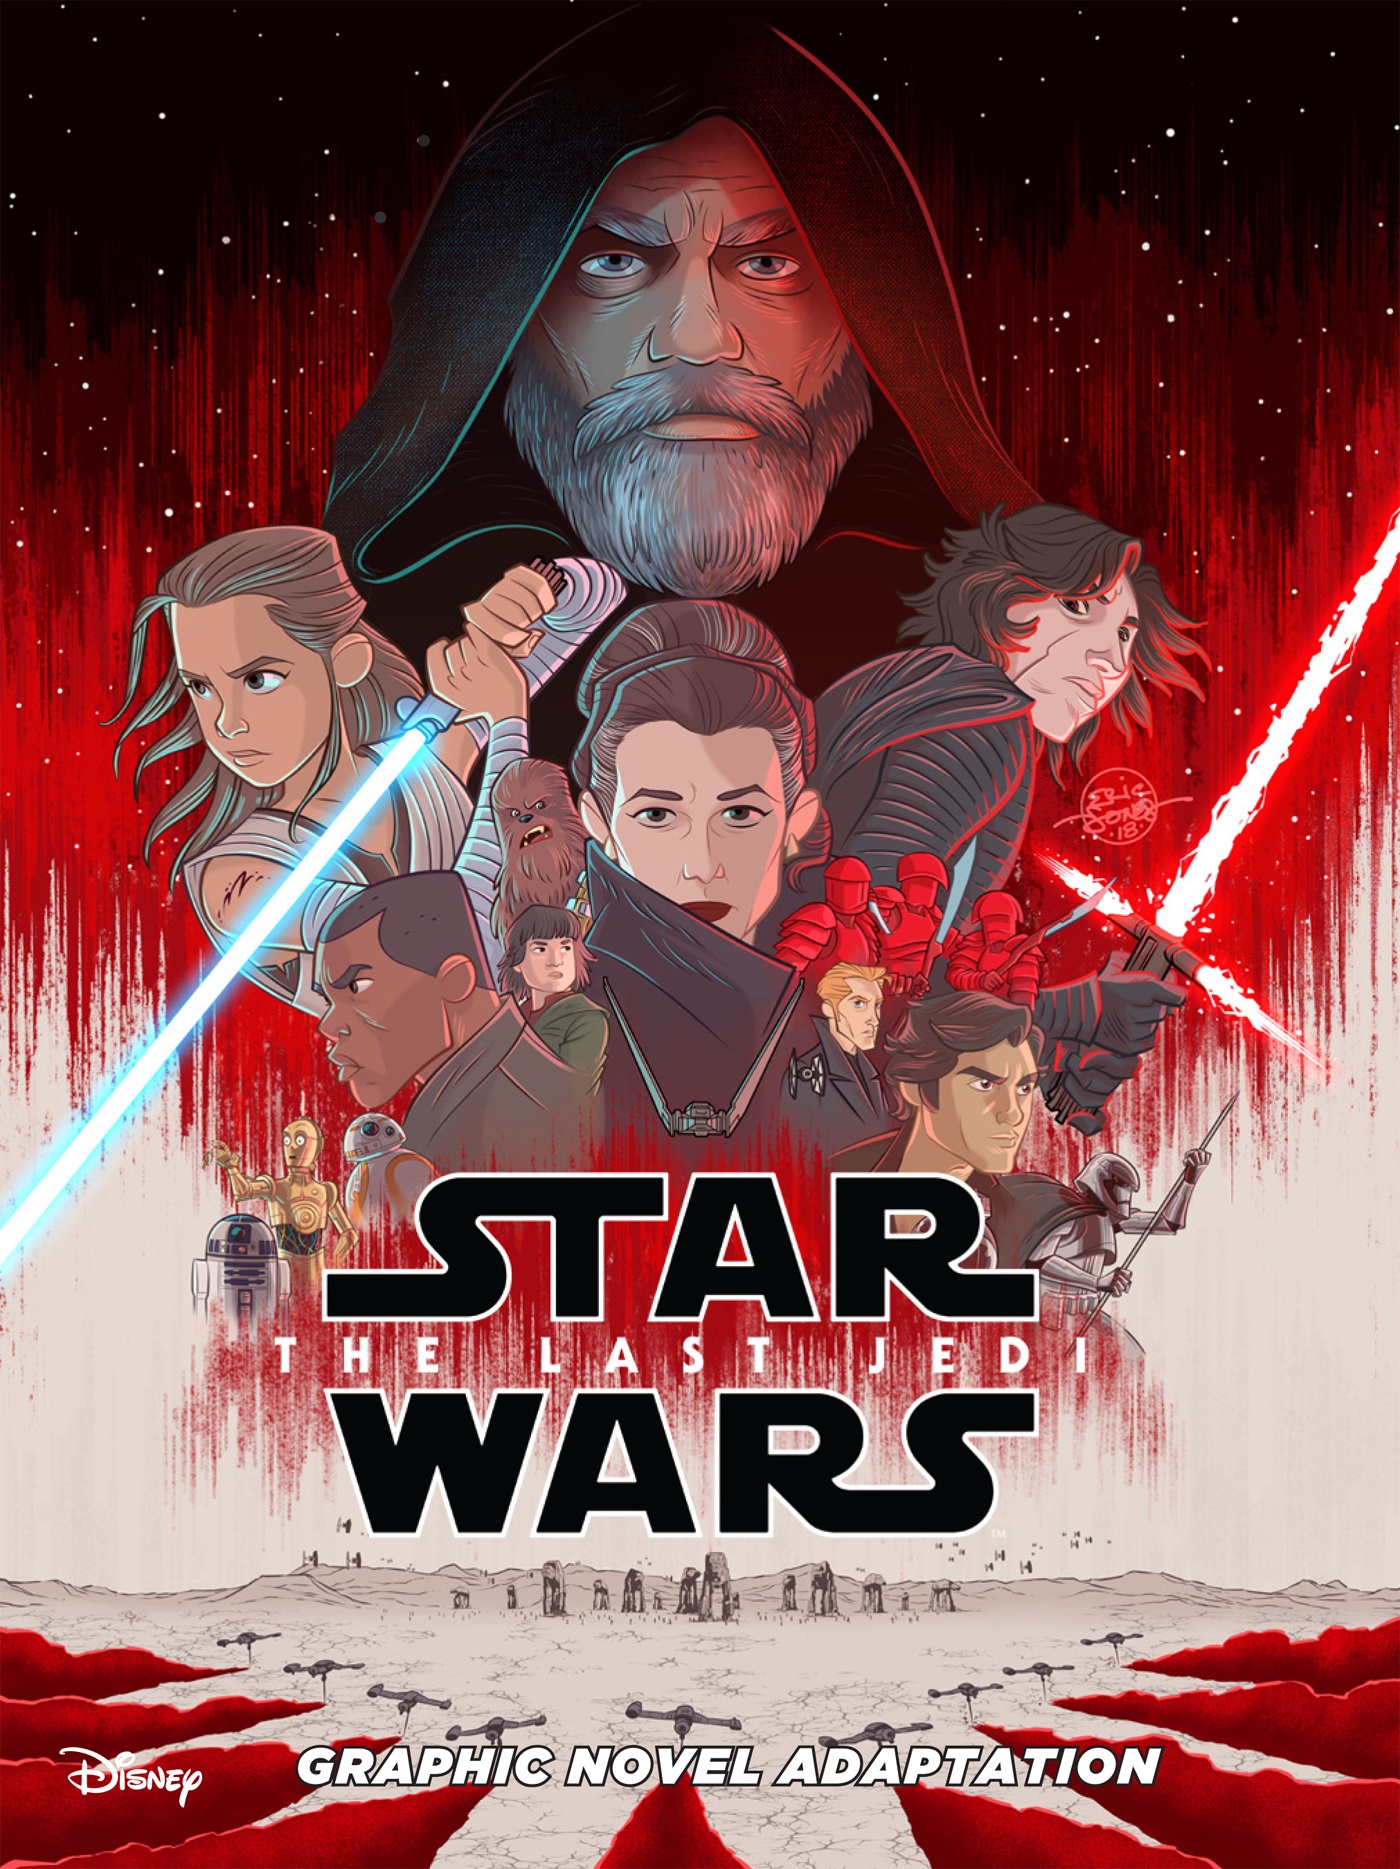 Star Wars: The Last Jedi Graphic Novel Adaptation, Wookieepedia